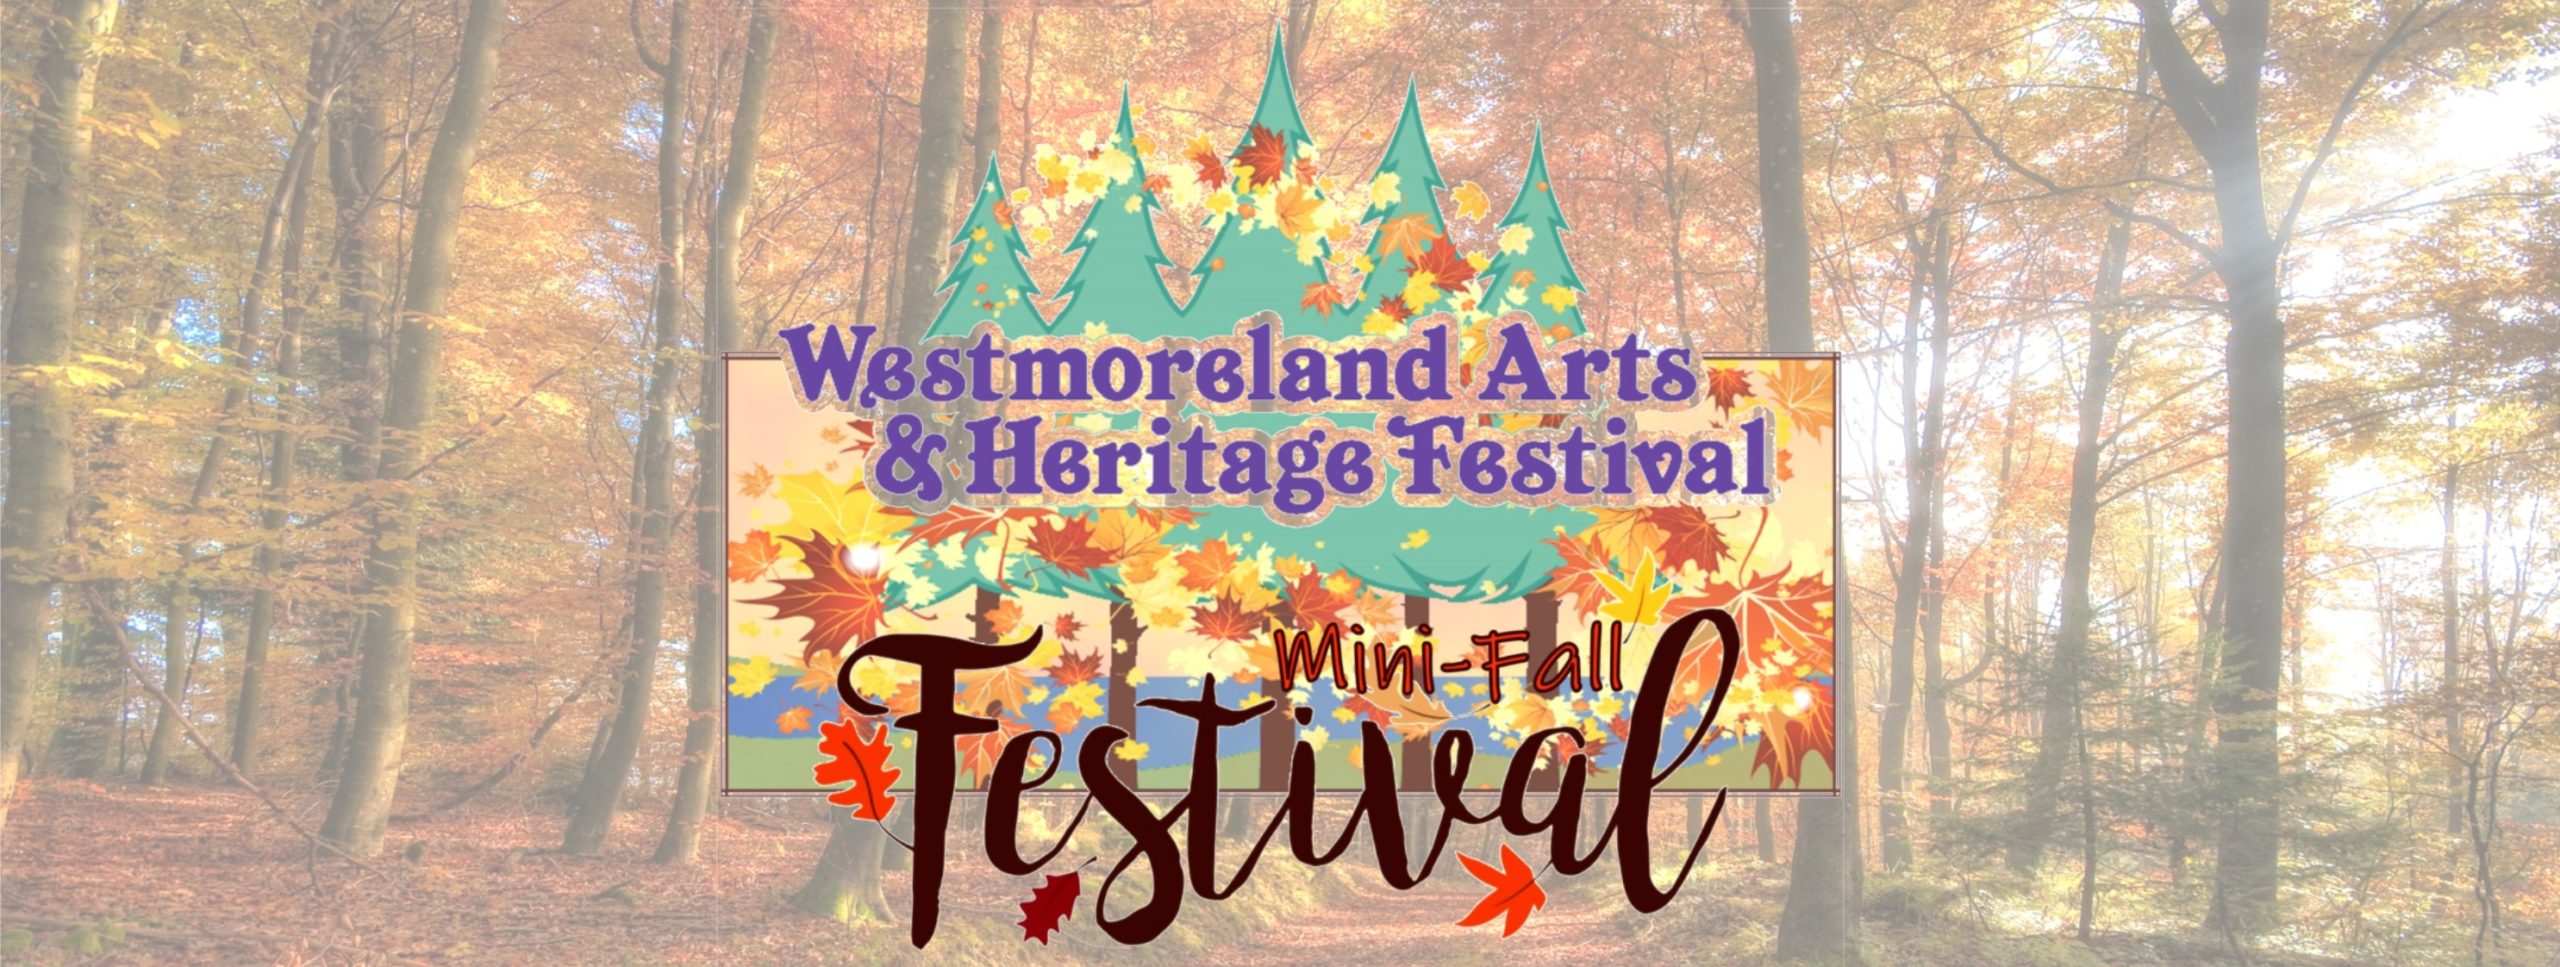 Westmoreland Arts & Heritage Festival MiniFall Festival Southwestern